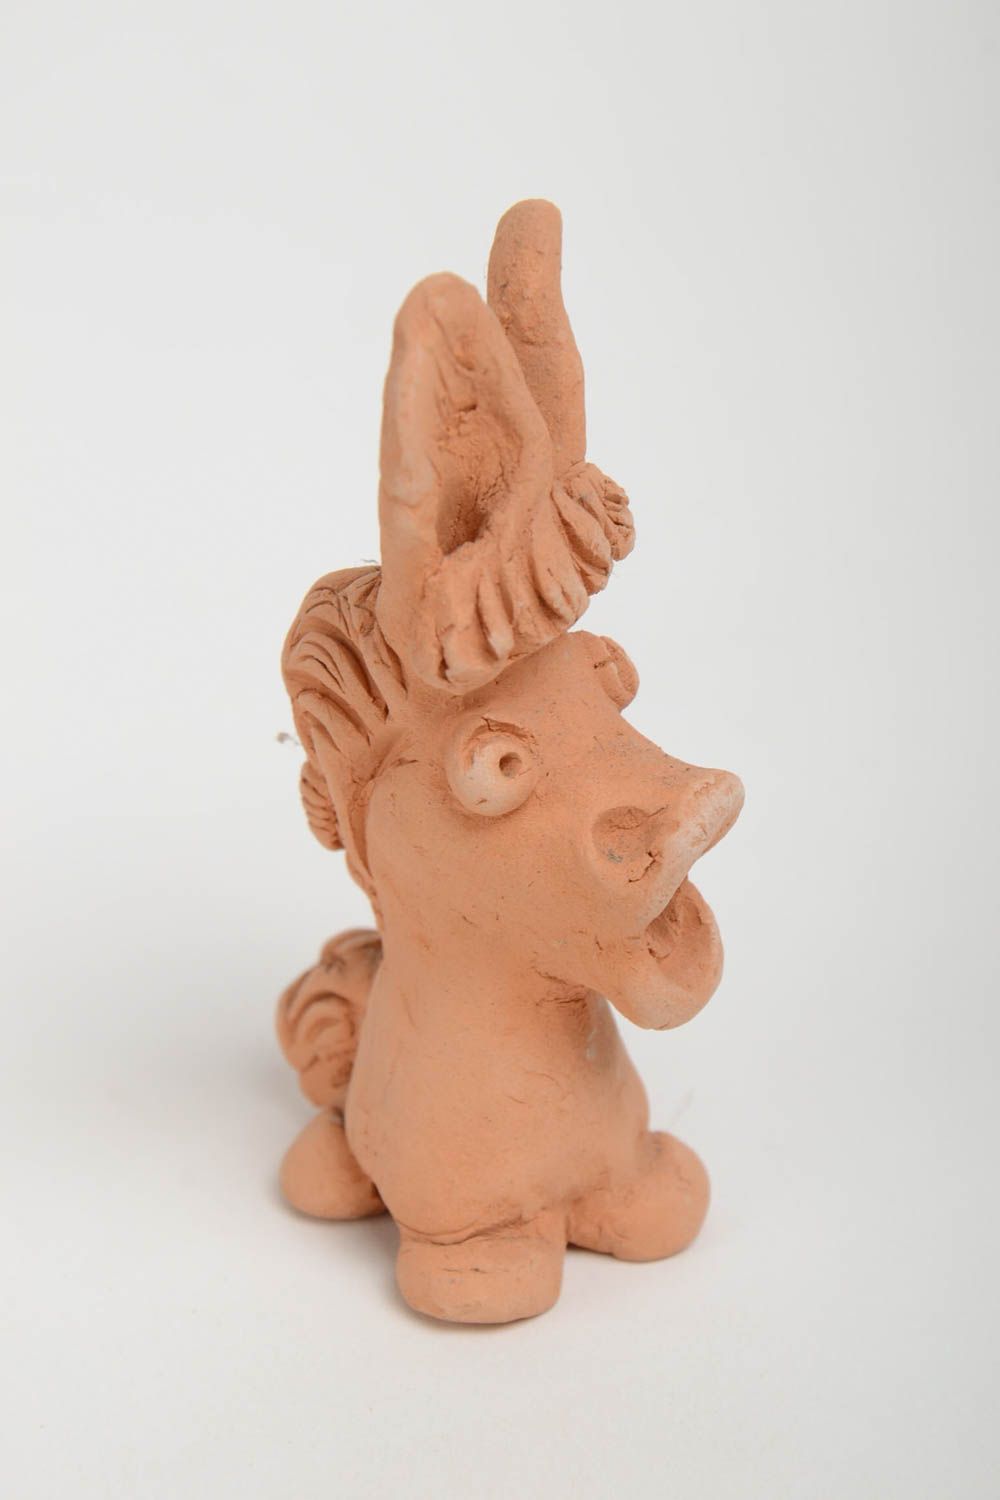 Small funny decorative ceramic souvenir figurine of donkey for interior design photo 4